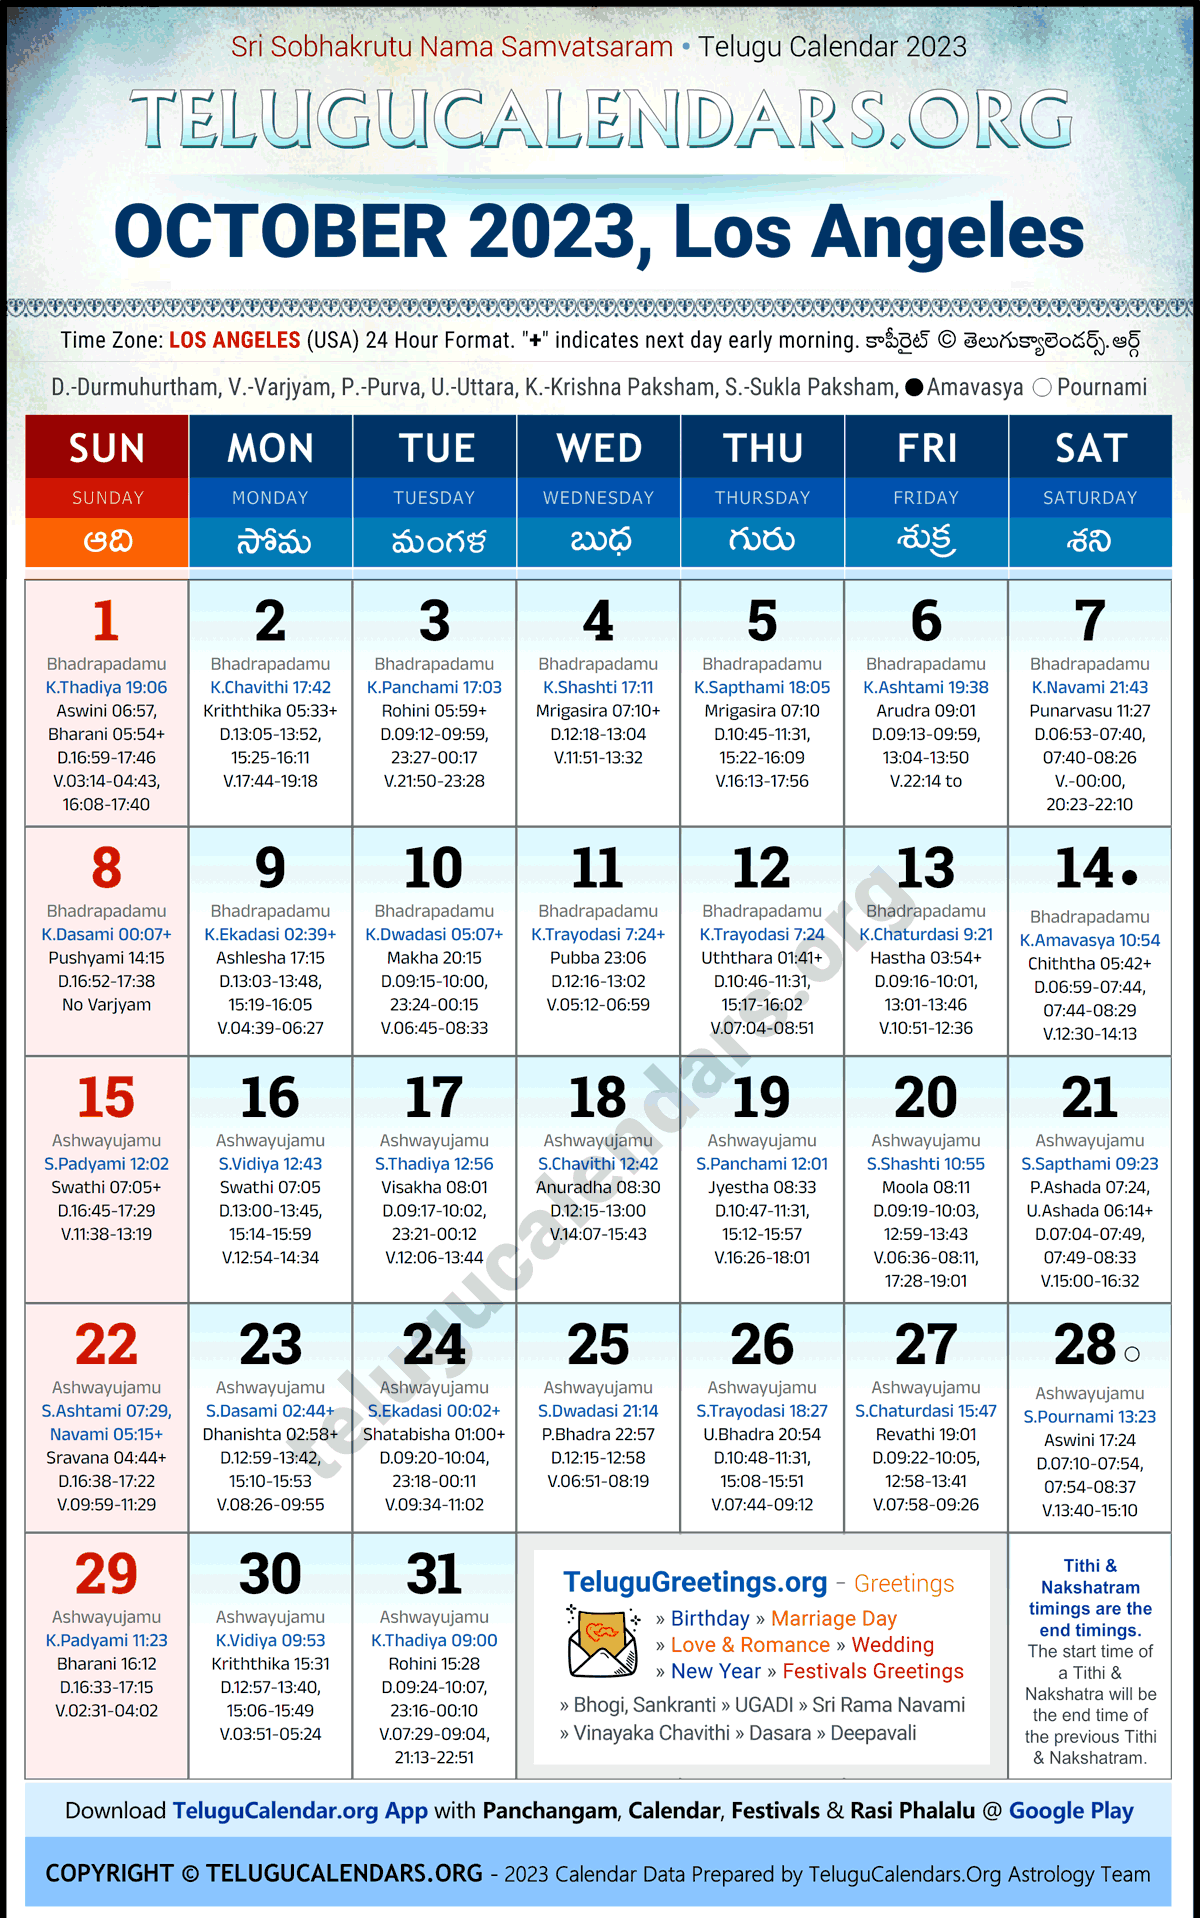 Telugu Calendar 2023 October Festivals for Los Angeles